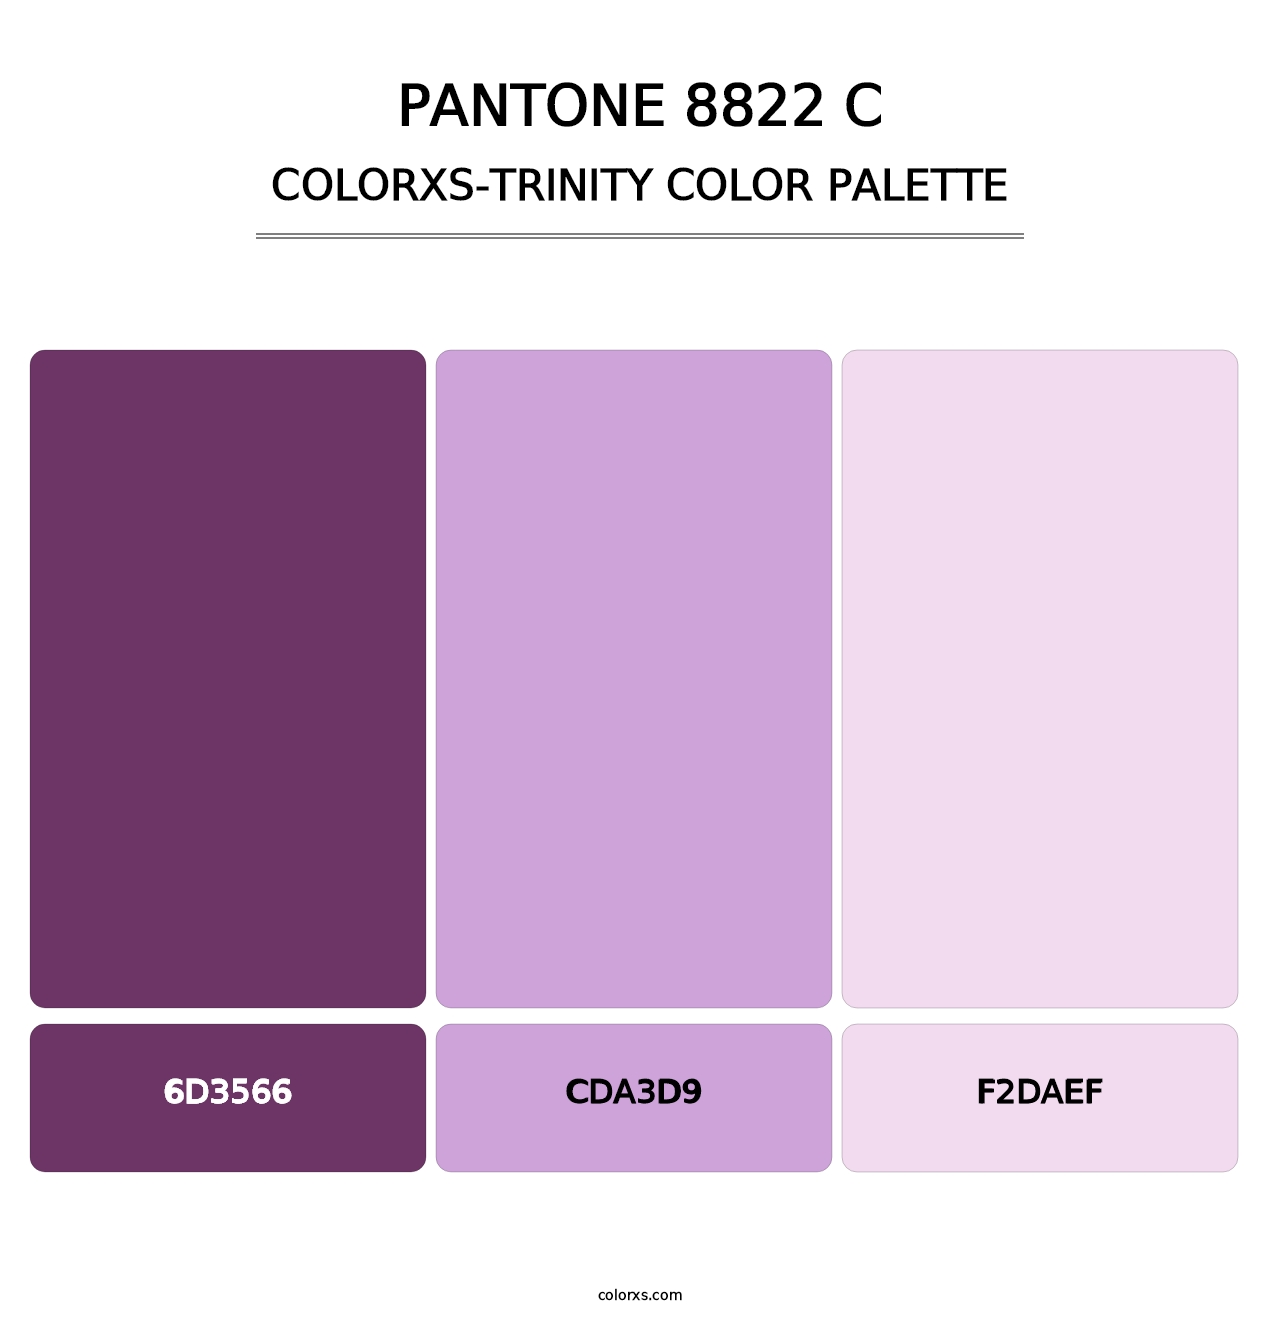 PANTONE 8822 C - Colorxs Trinity Palette